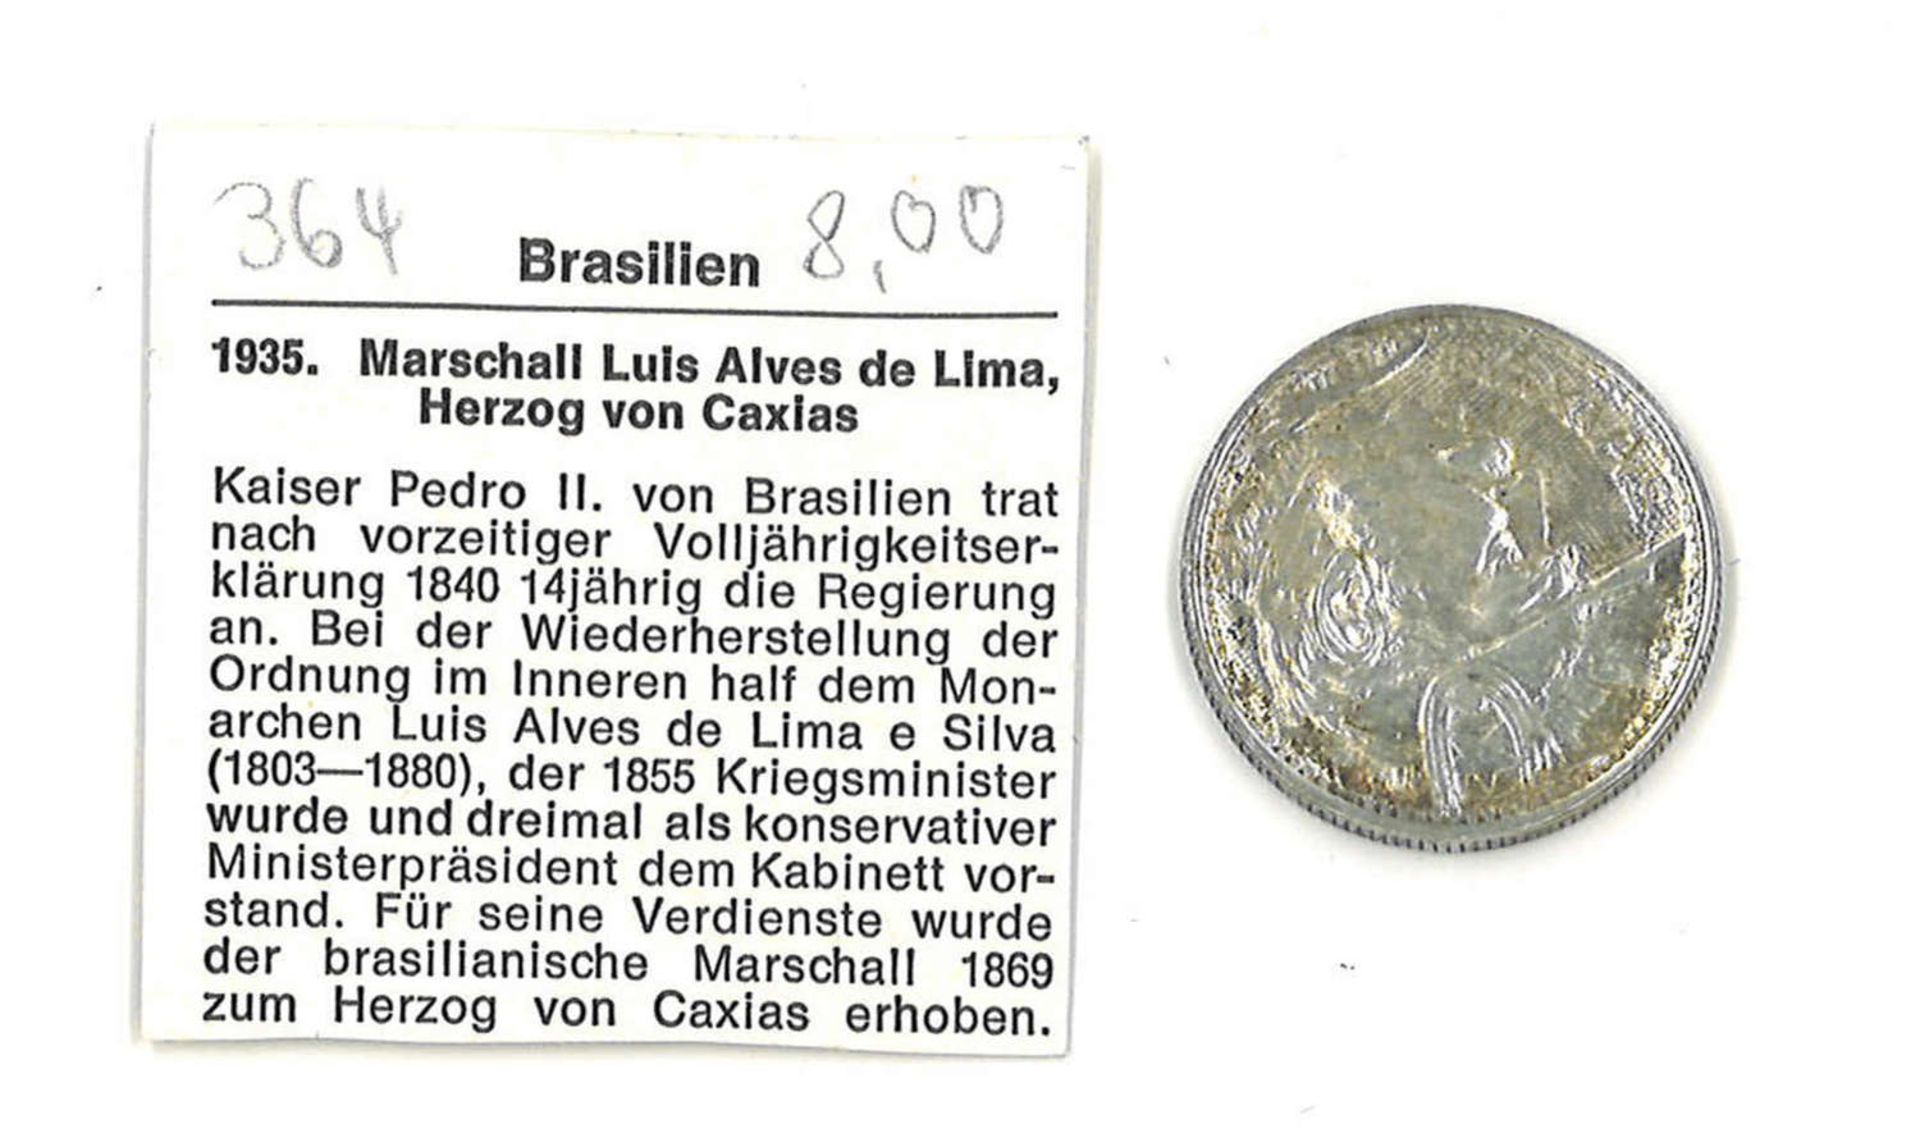 Silbermünze Brasilien 1935. 2000 ReisSilver Coin Brazil 1935. 2000 Rice